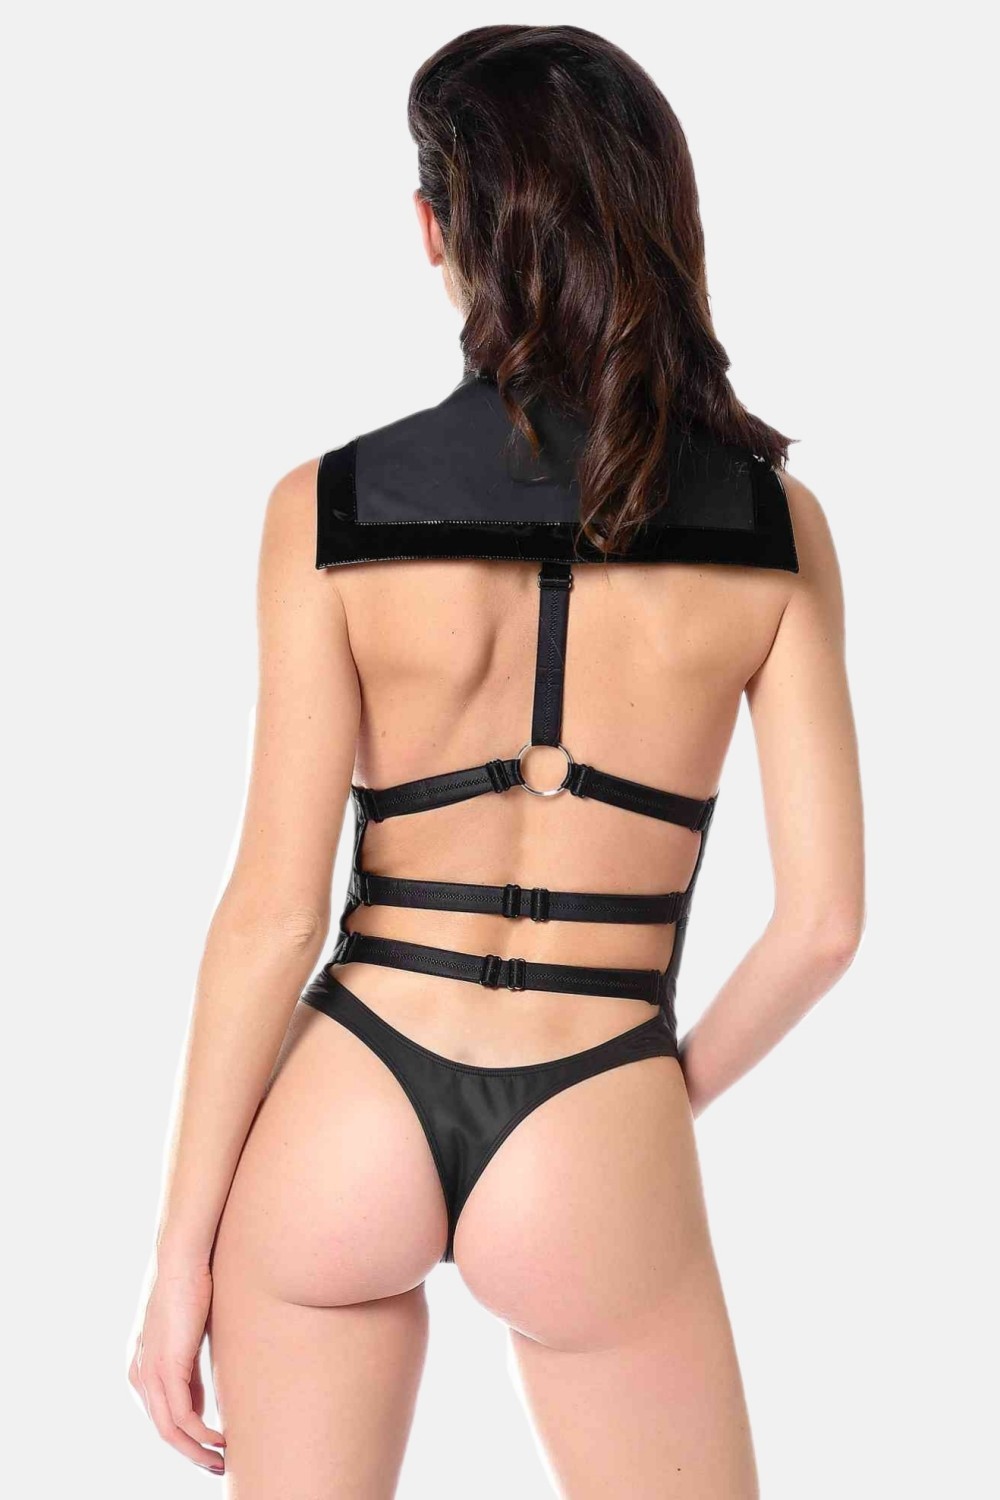 Ondine, strappy back bodysuit - Patrice Catanzaro Official Website